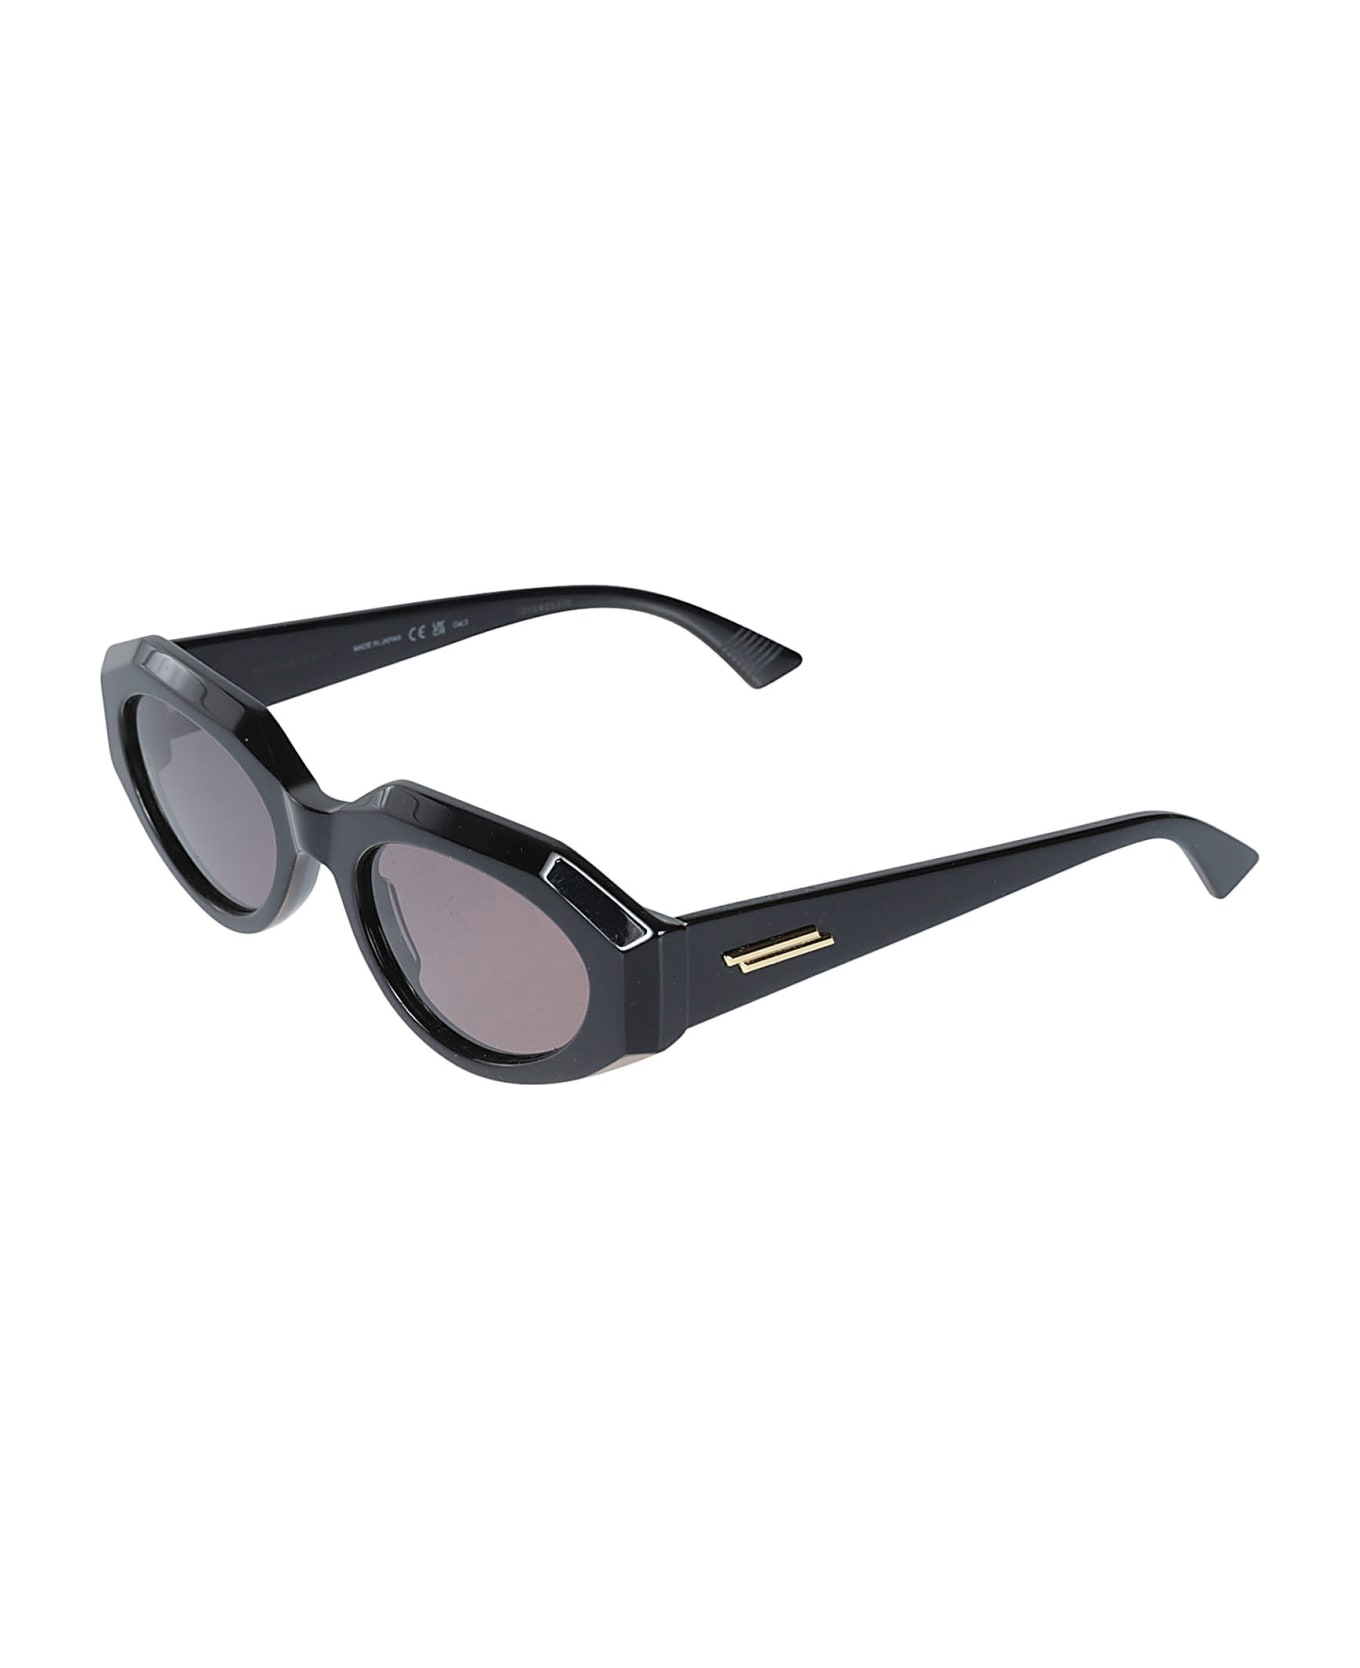 Bottega Veneta Eyewear Oval Frame Sunglasses - Black/Grey サングラス